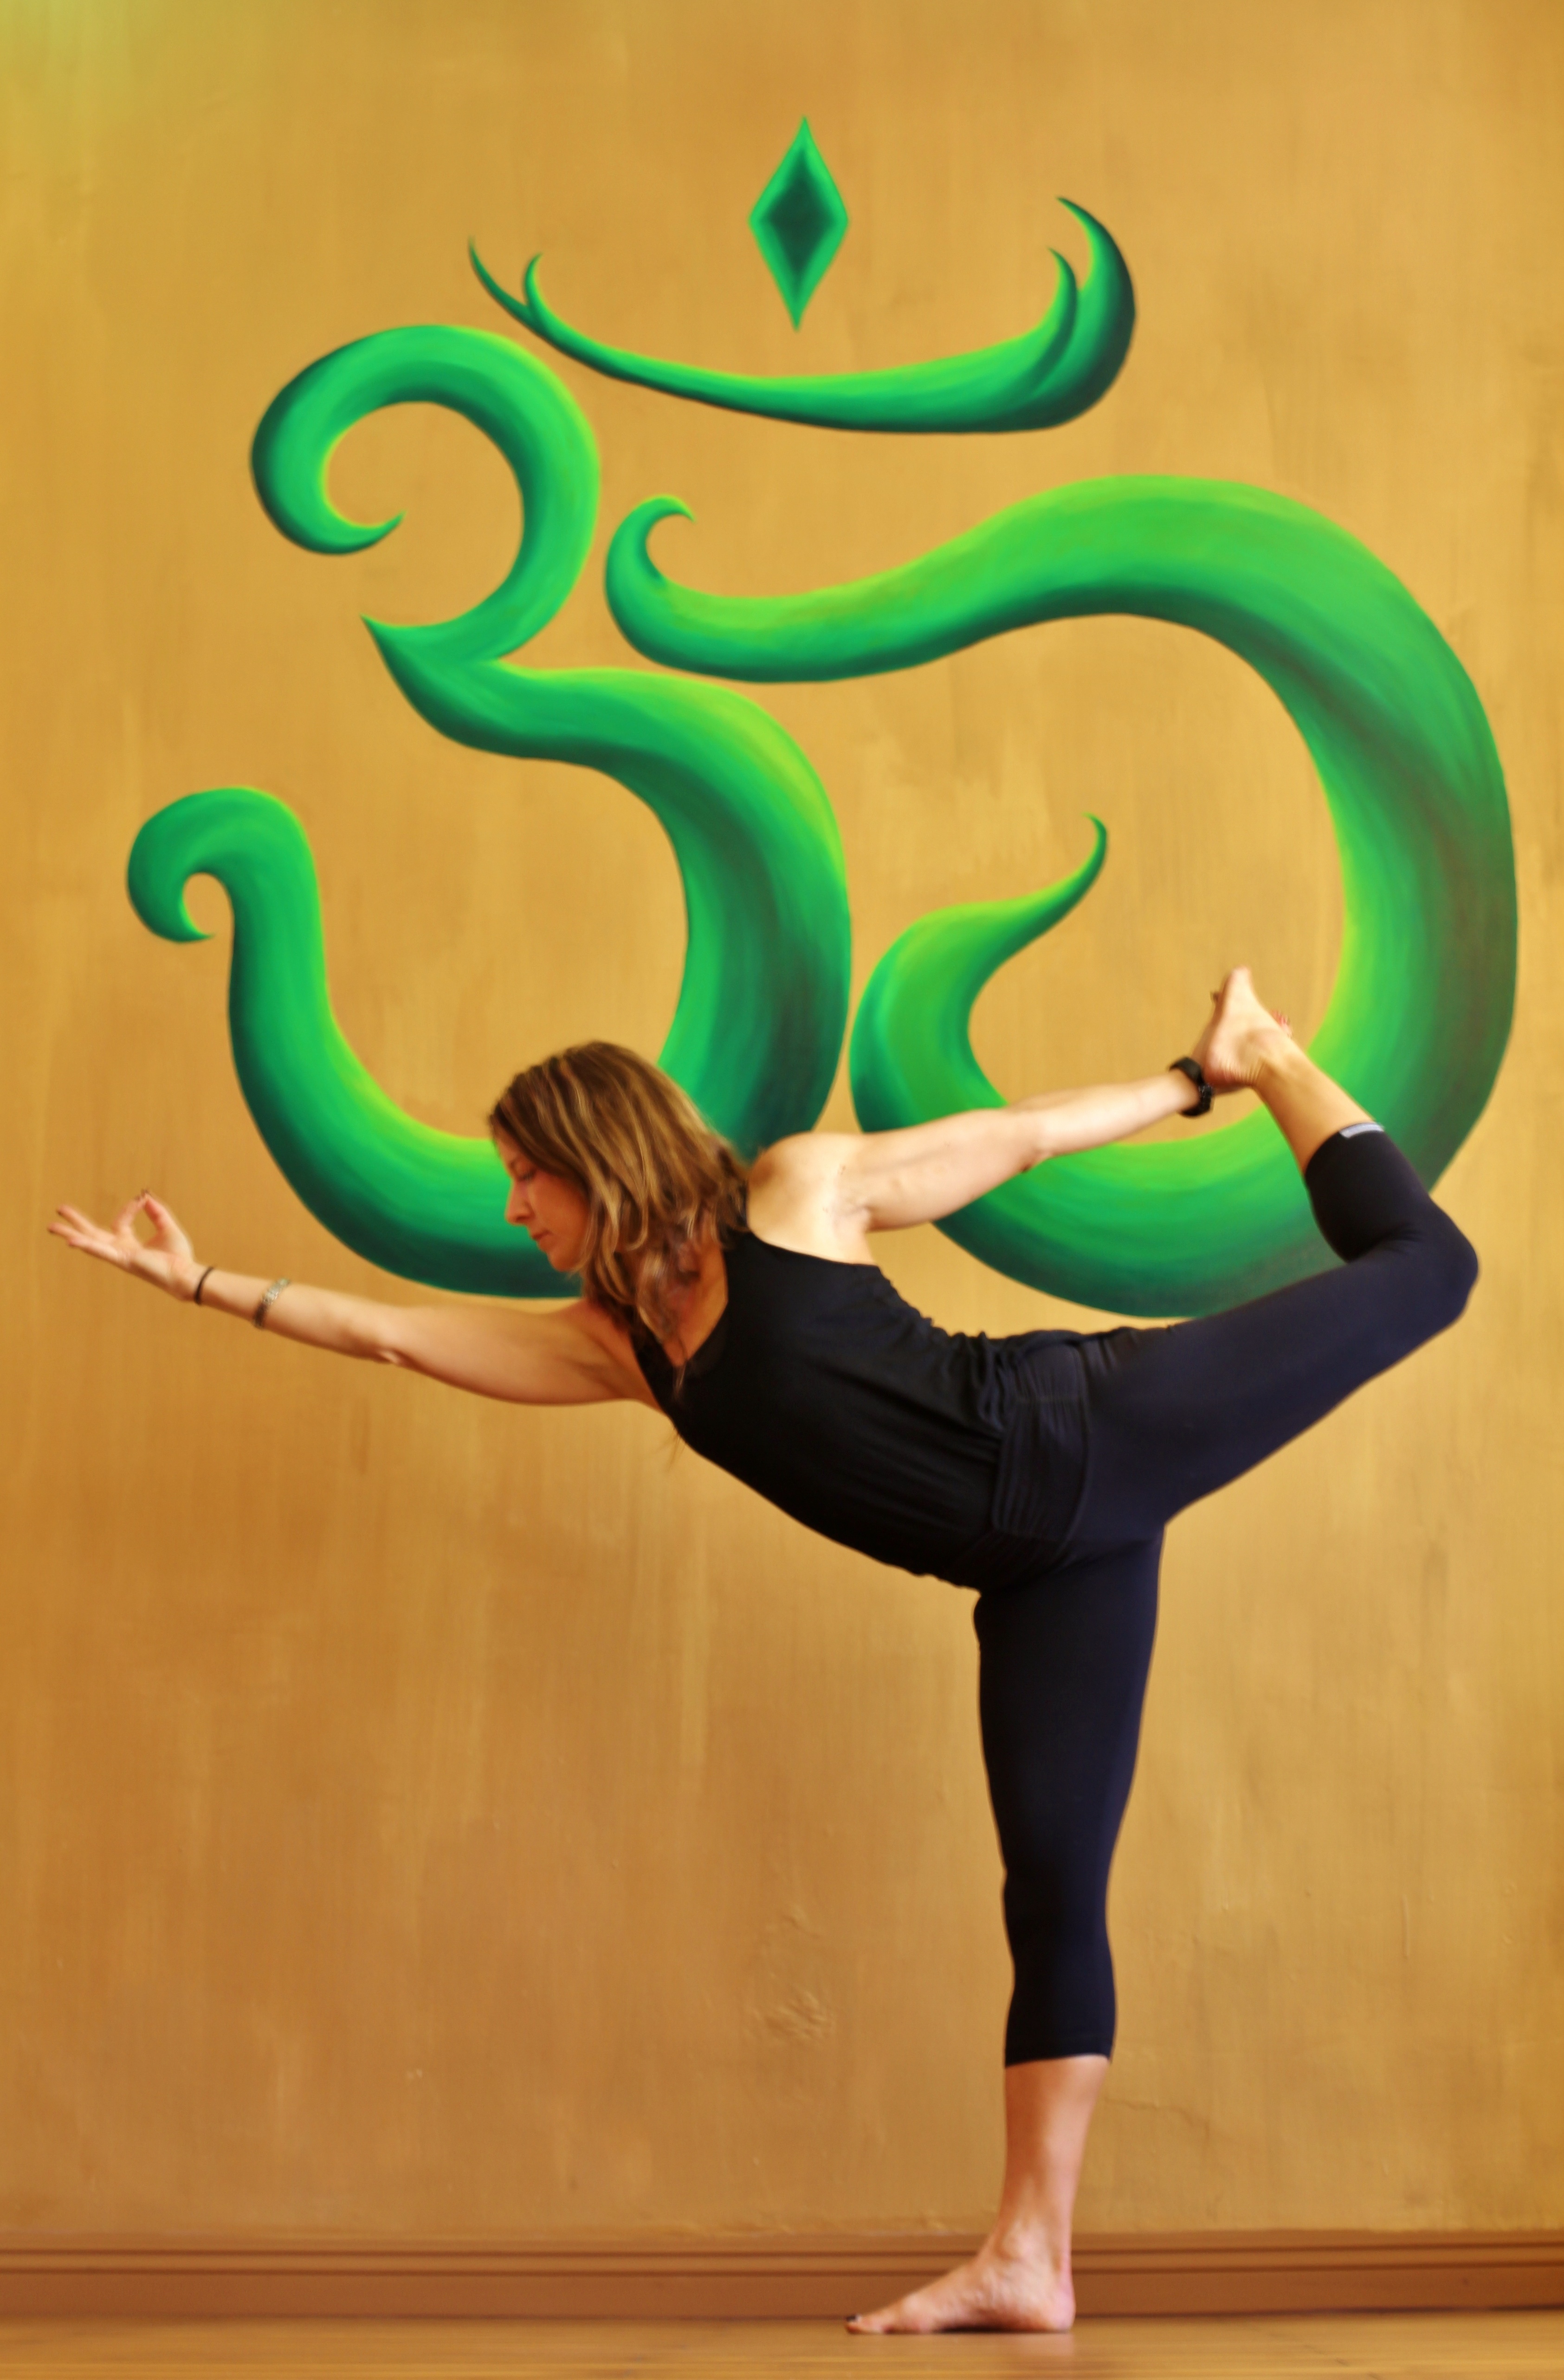 Inner Power Moves to Woodland Hills - LA Yoga Magazine - Ayurveda